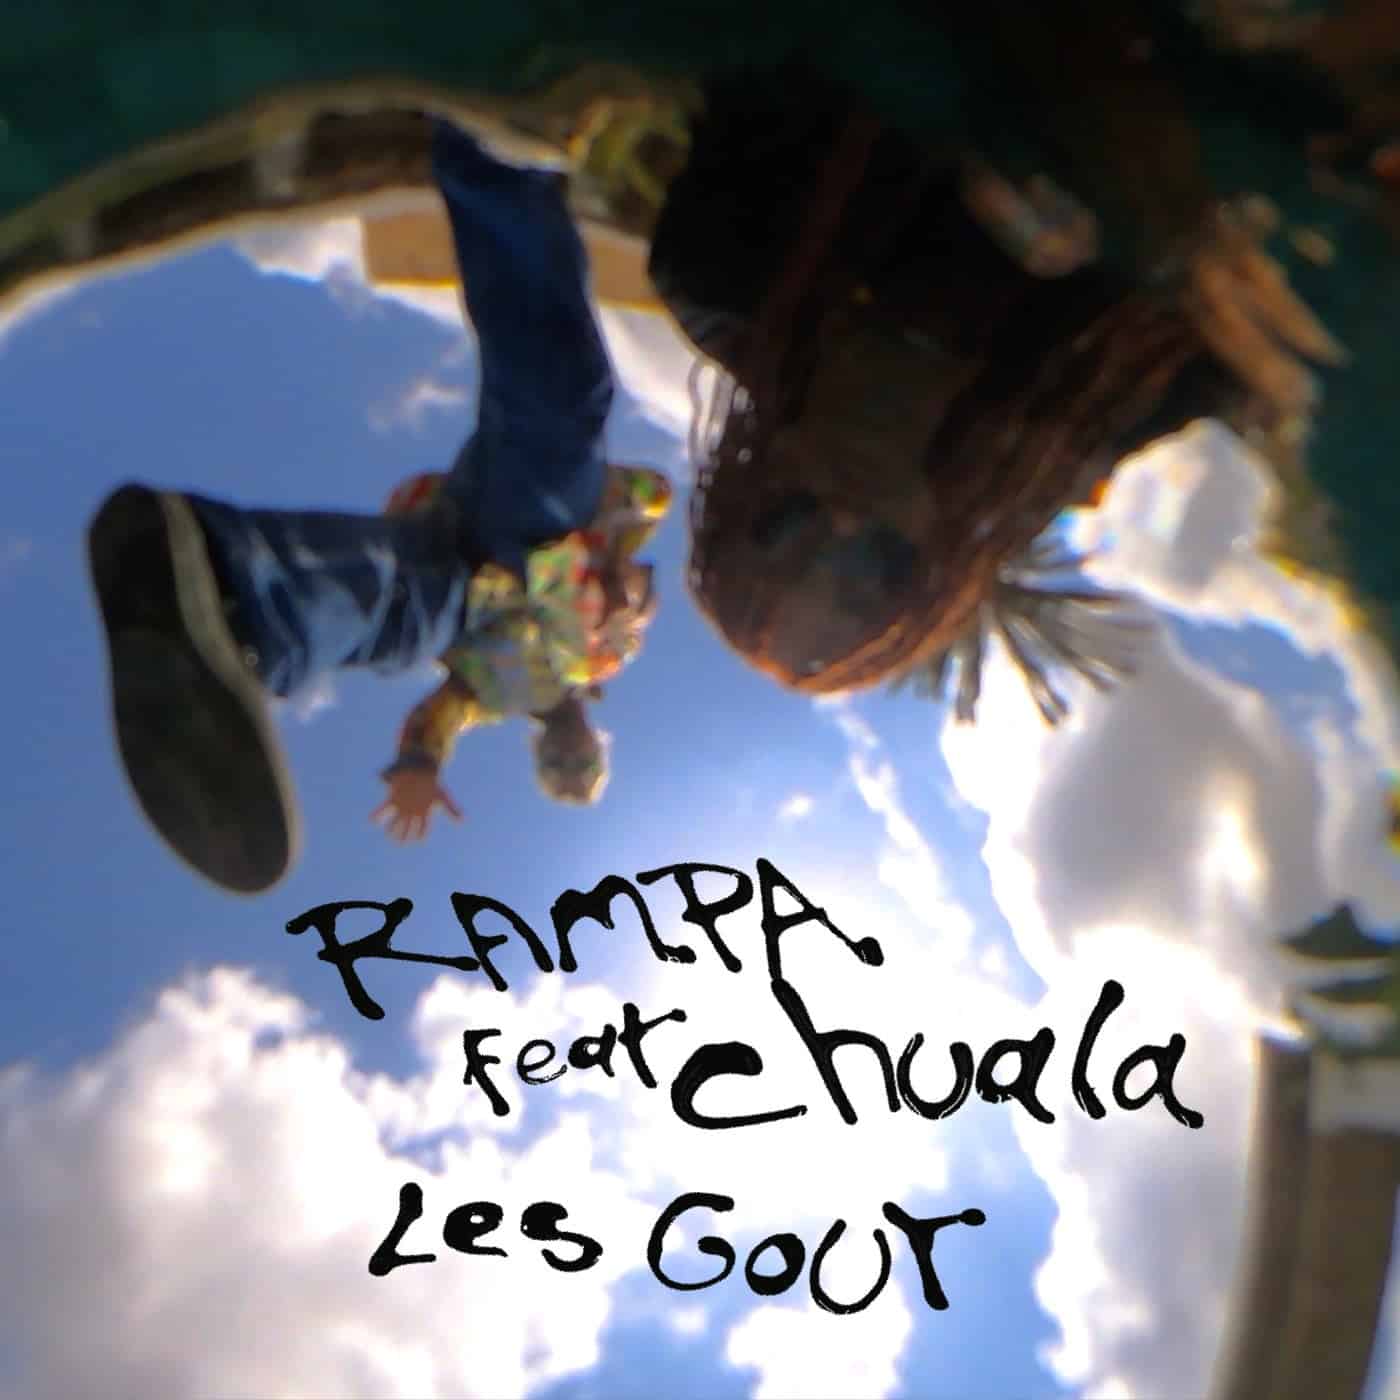 Download Rampa, chuala - Les Gout on Electrobuzz